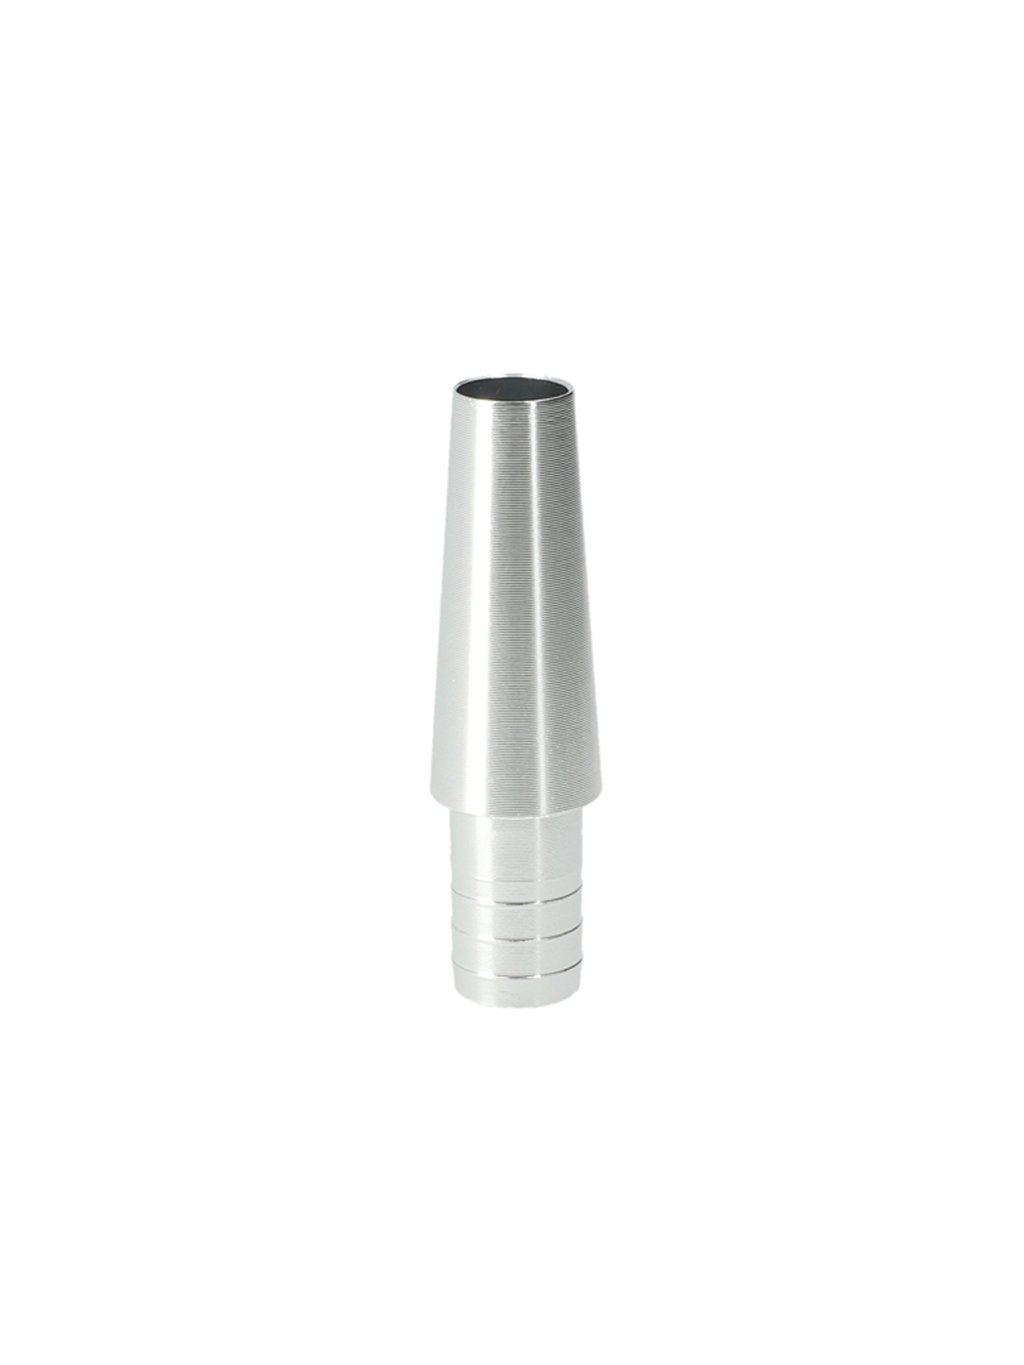 Konektor pro silikonovou hadici - AO, Schlauchanschluss Silver